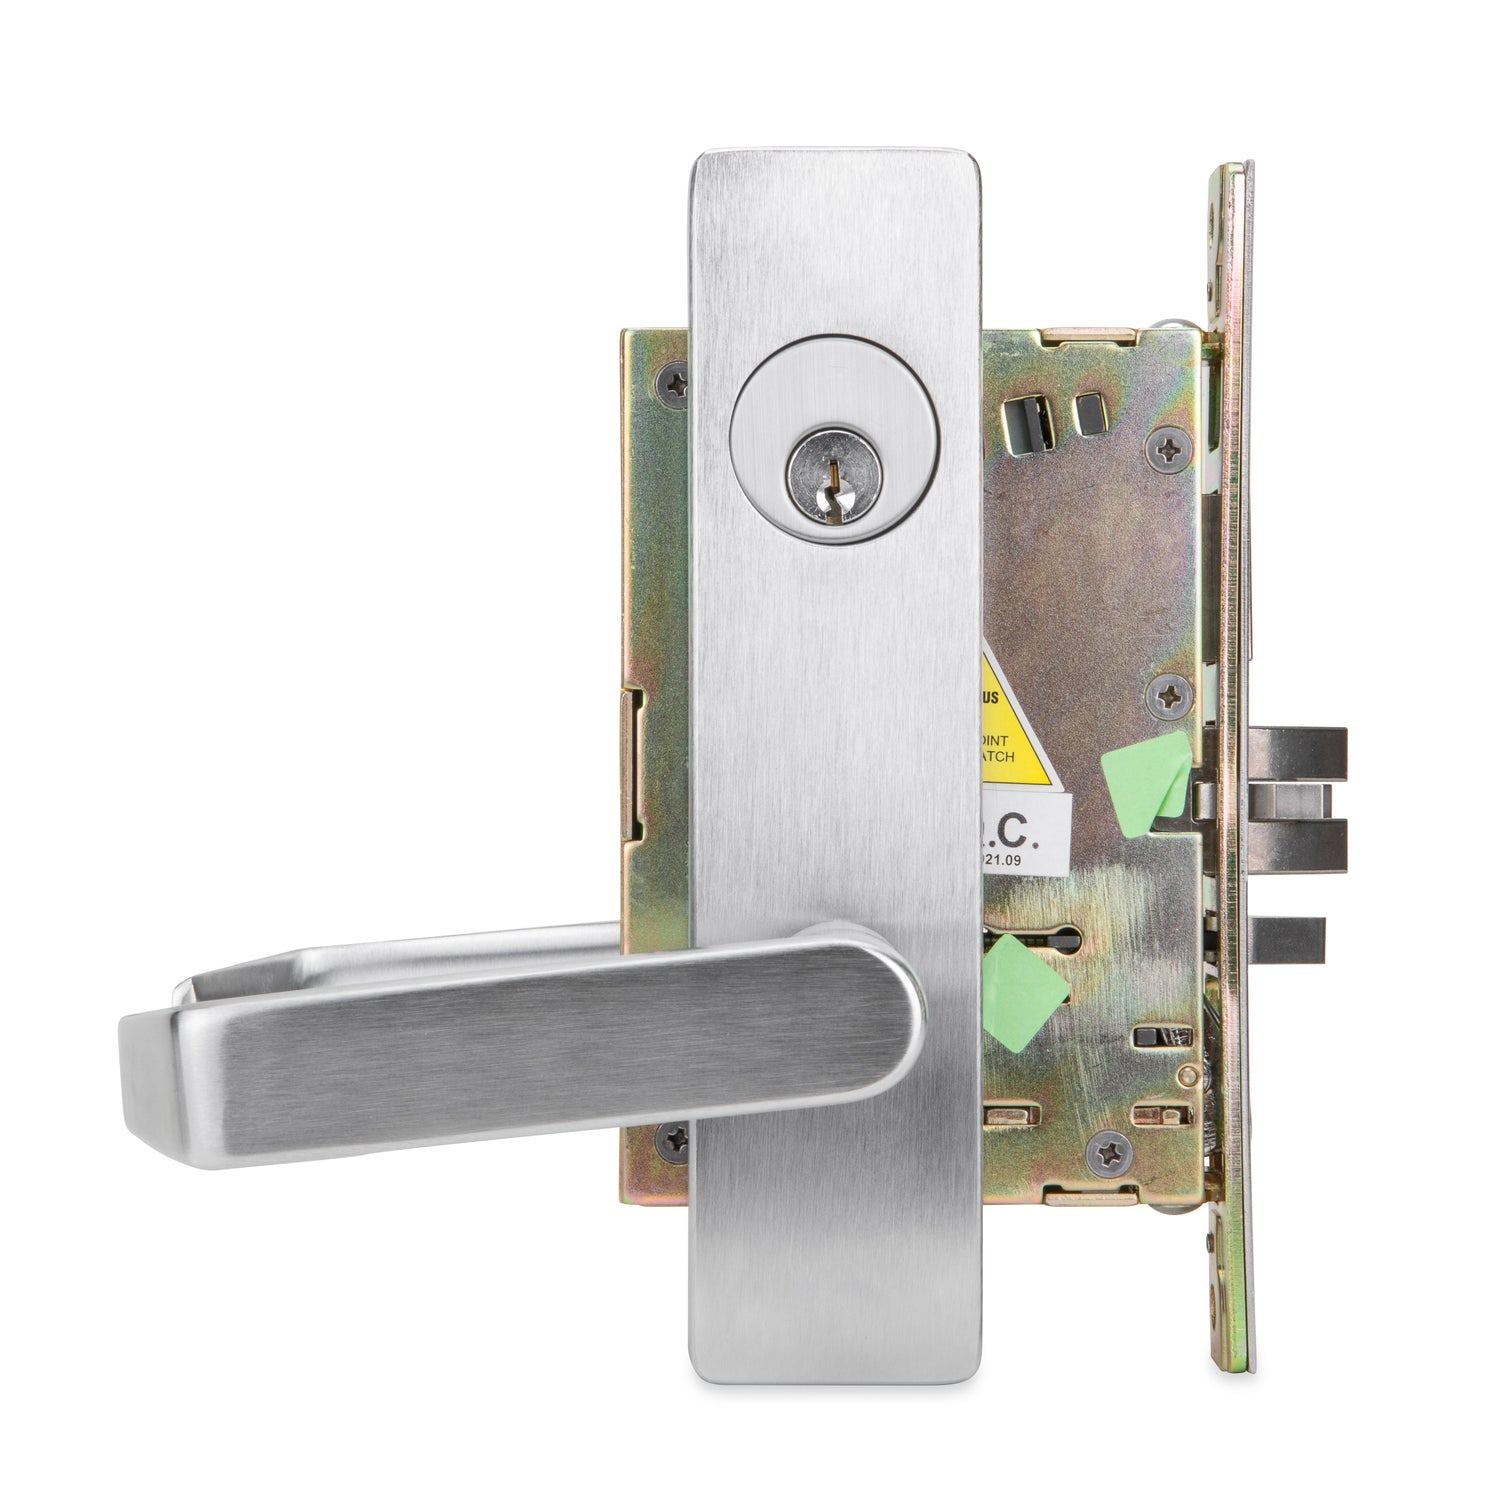 DXML Series Brushed Chrome Grade 1 Storeroom Mortise Lock Door Handle with Escutcheon Lever -  Pro-Edge HD